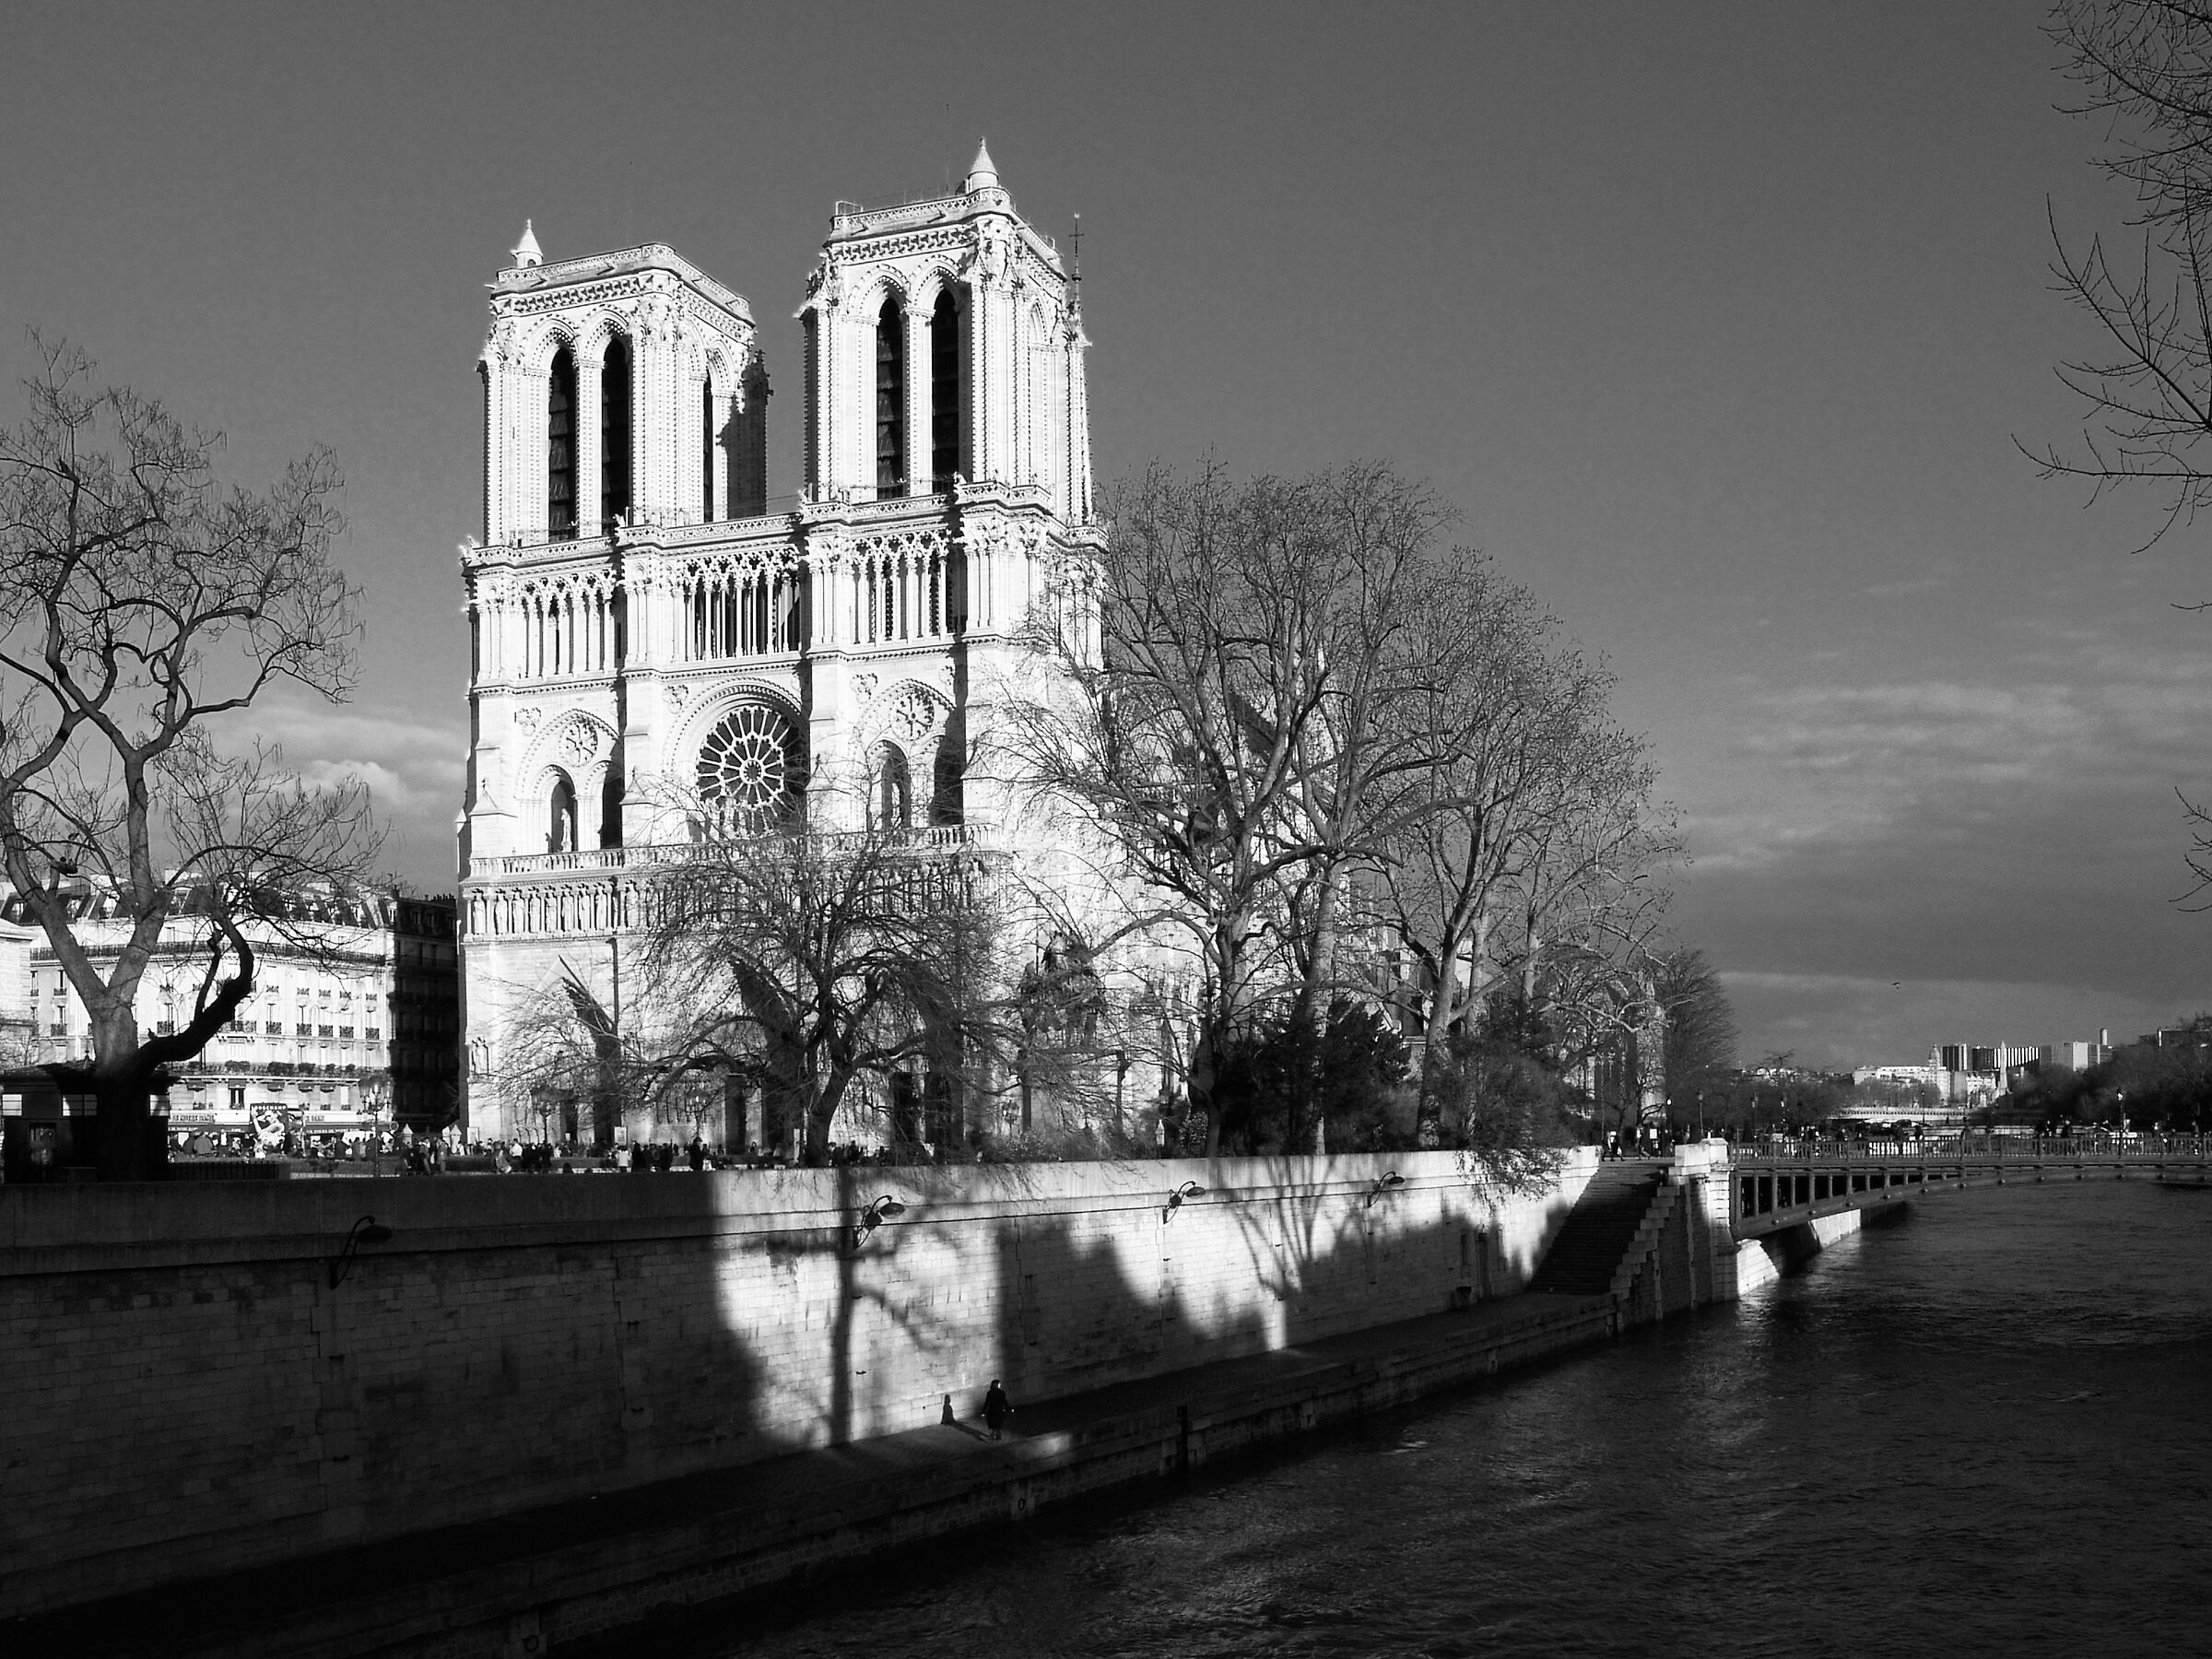 Notre Dame...